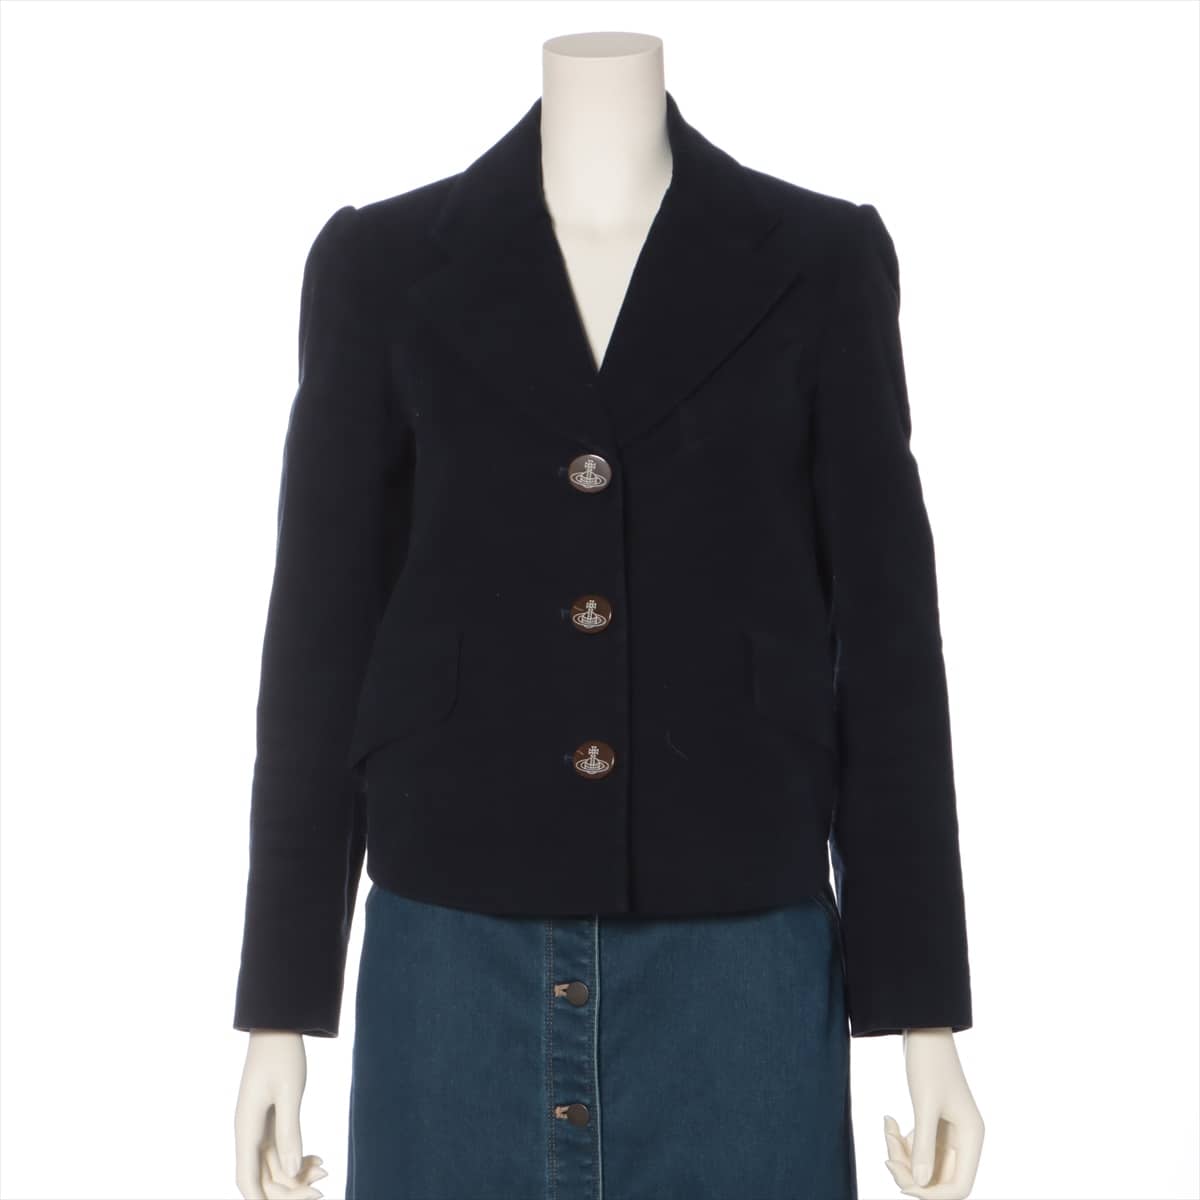 Vivienne Westwood RED LABEL Cotton & Polyurethane Tailored jacket 2 Ladies' Navy blue